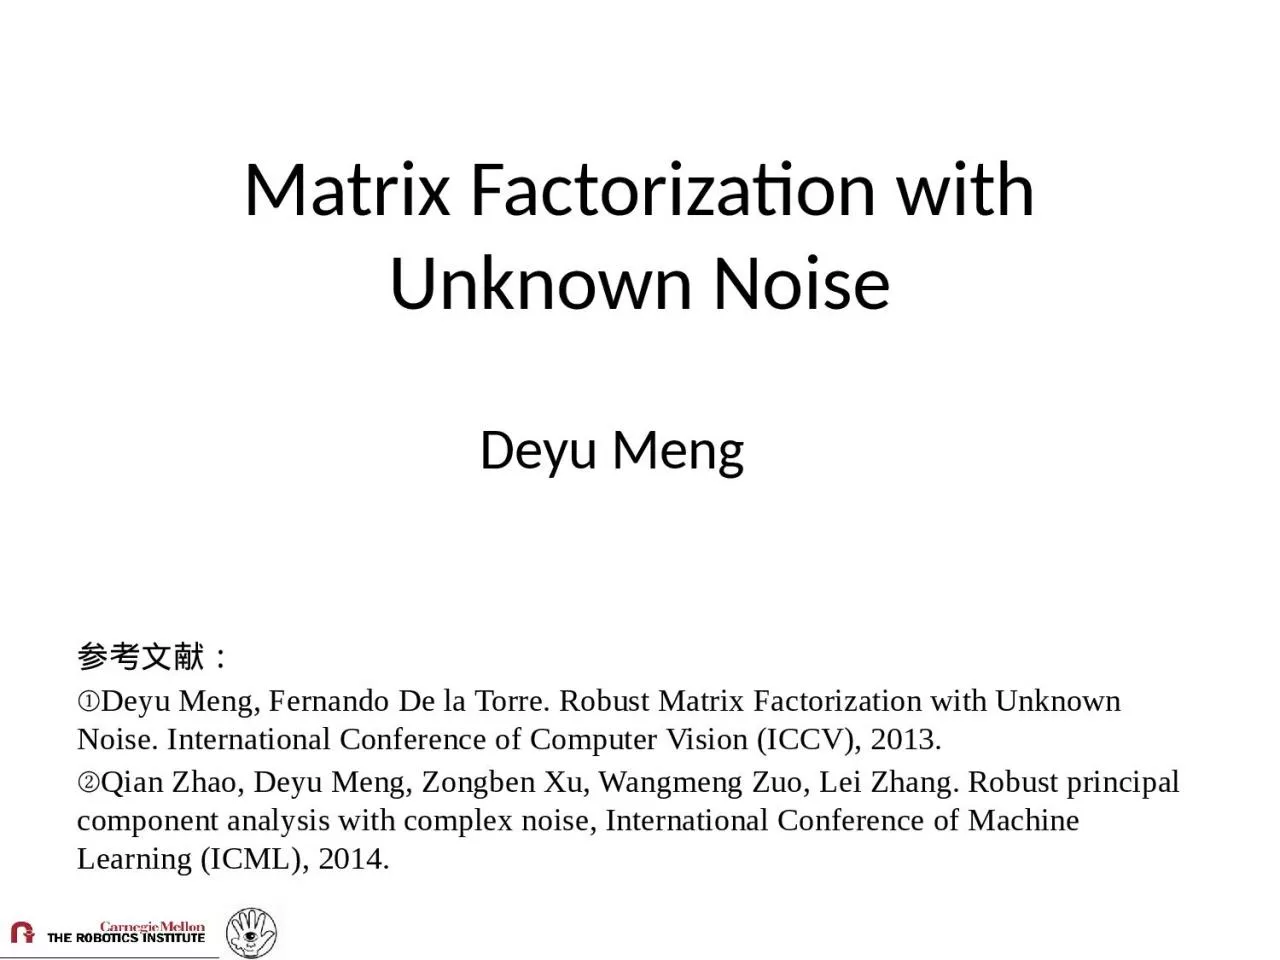 Matrix Factorization with Unknown Noise